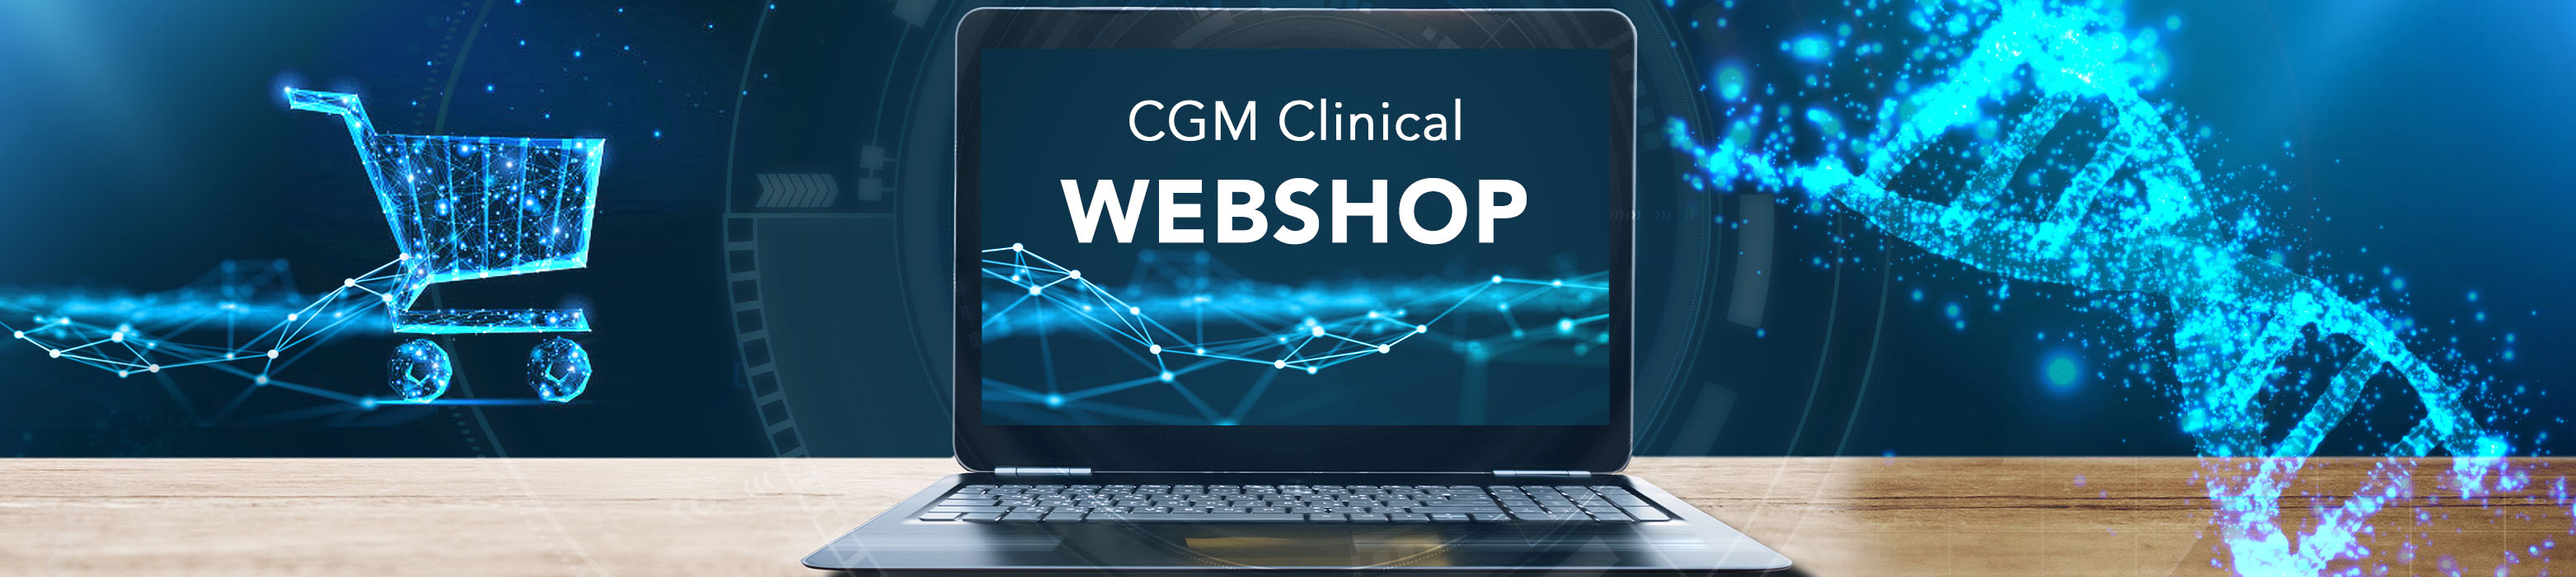 Header cgm clinical webshop startseite v2